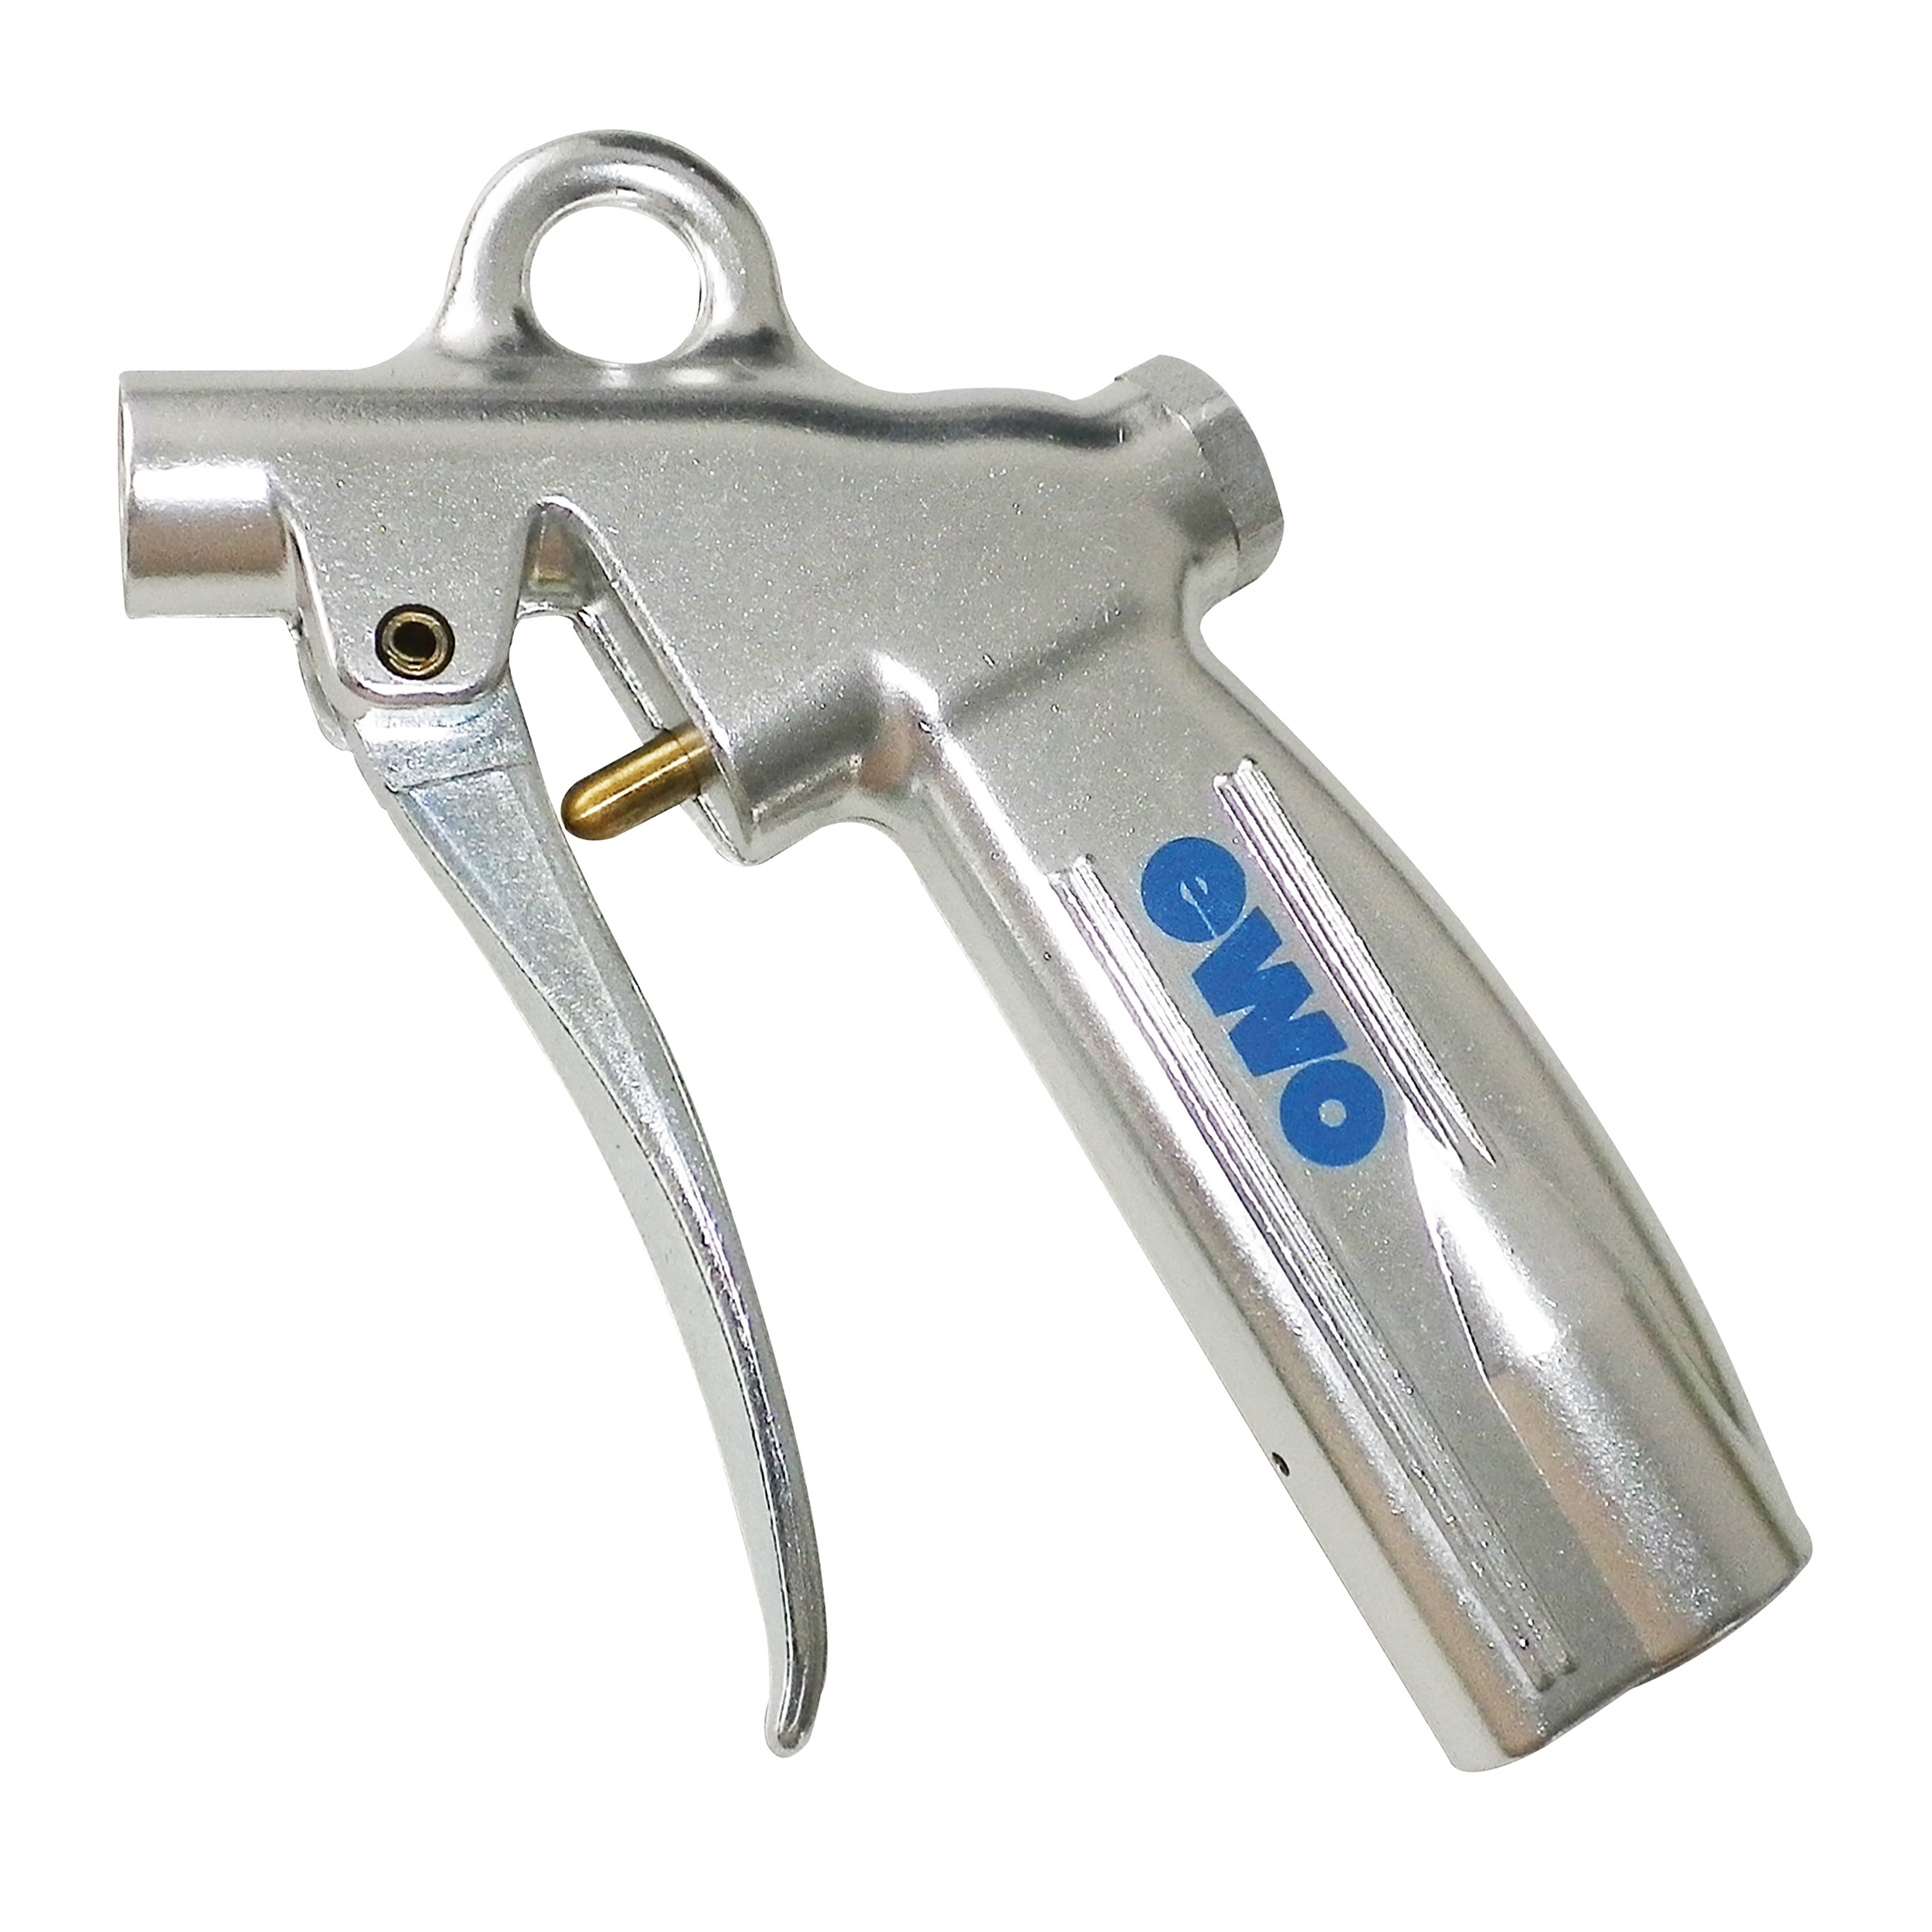 Blow gun safetyblow, pressure limitation valve 3.5 bar/50.7 psi, compressed air connection: G¼ f, M12 × 1.25 f, weight: 255 g